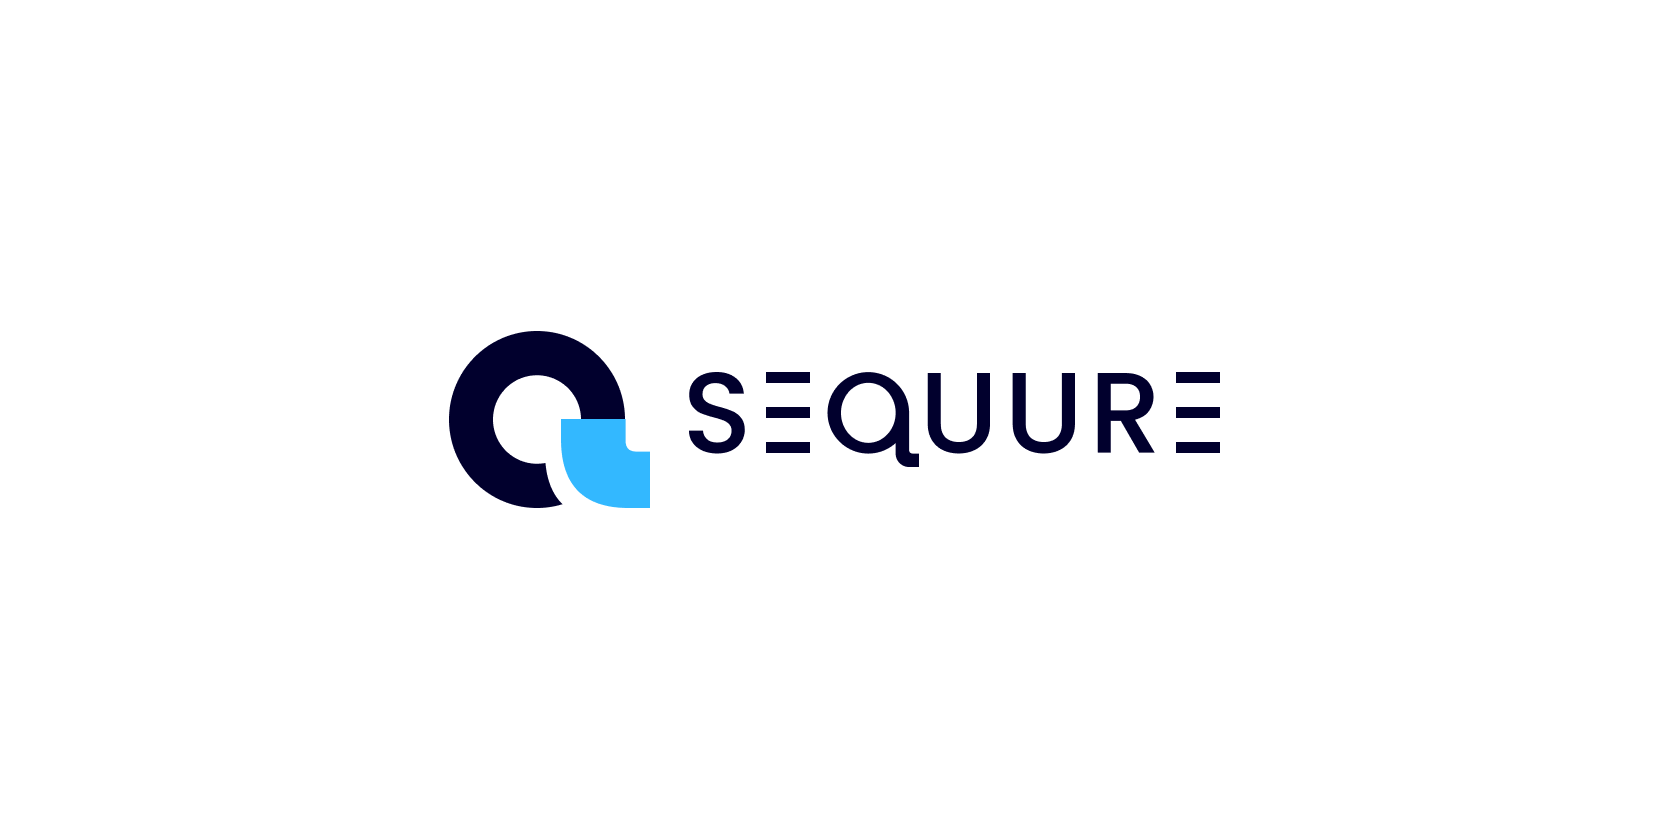 The Sequure logo on light backgrounds